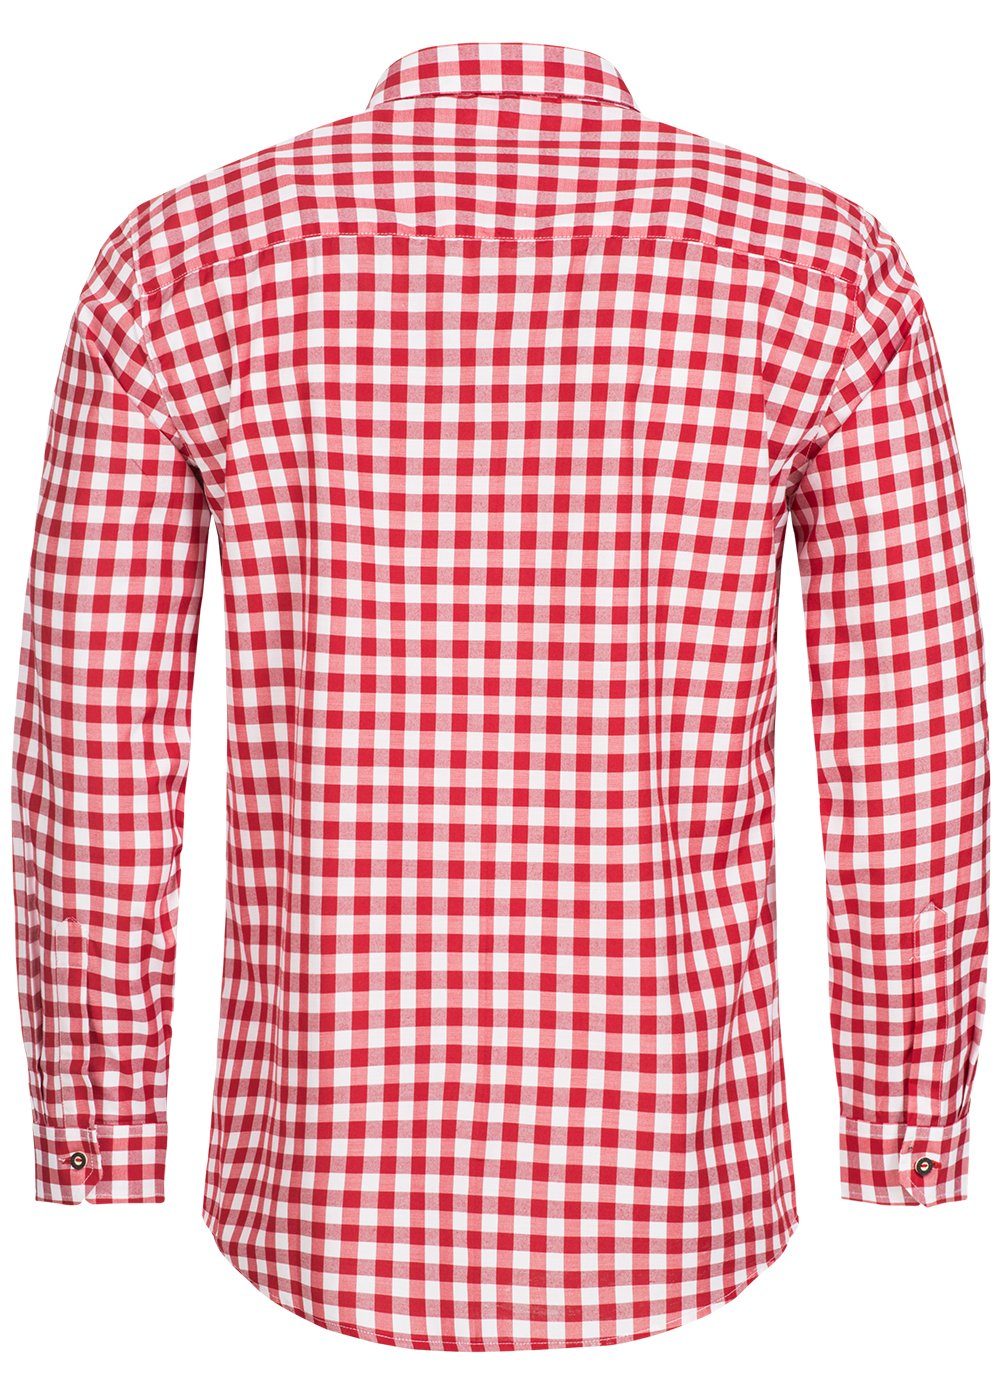 Fit Trachtenhemd modern Rot OC-Franzl, Stockerpoint Trachtenhemd kariert,